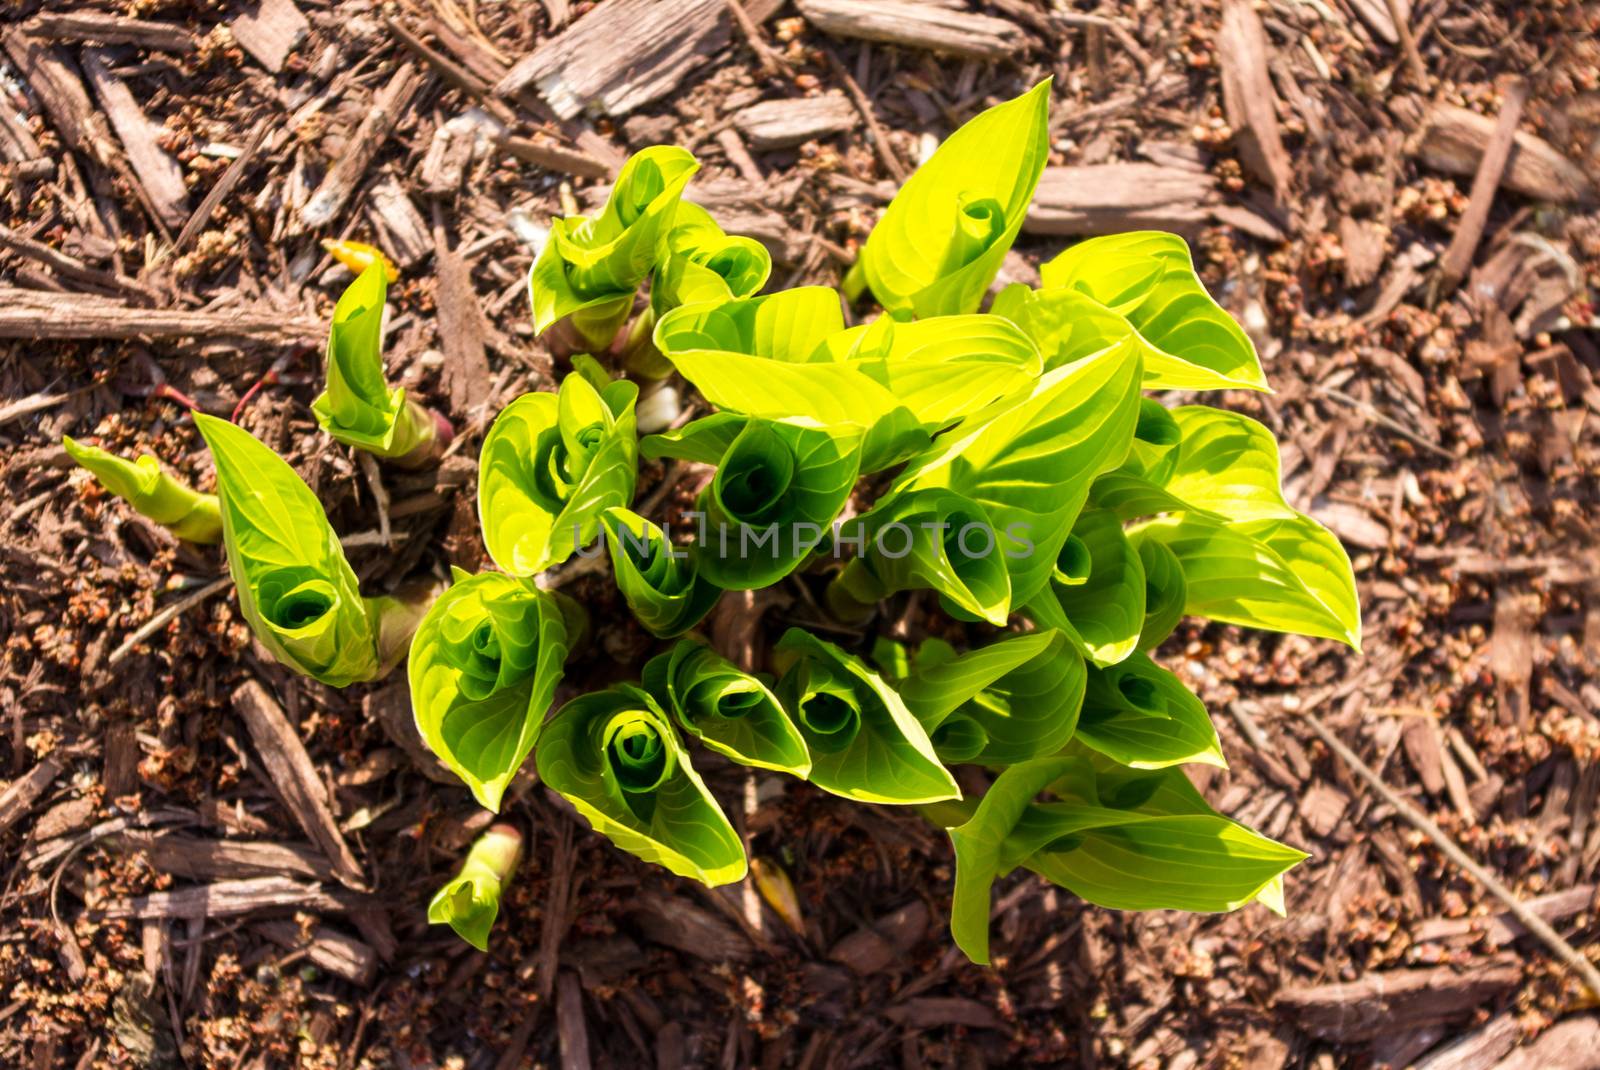 Hostas Emerging in Spring by krisblackphotography